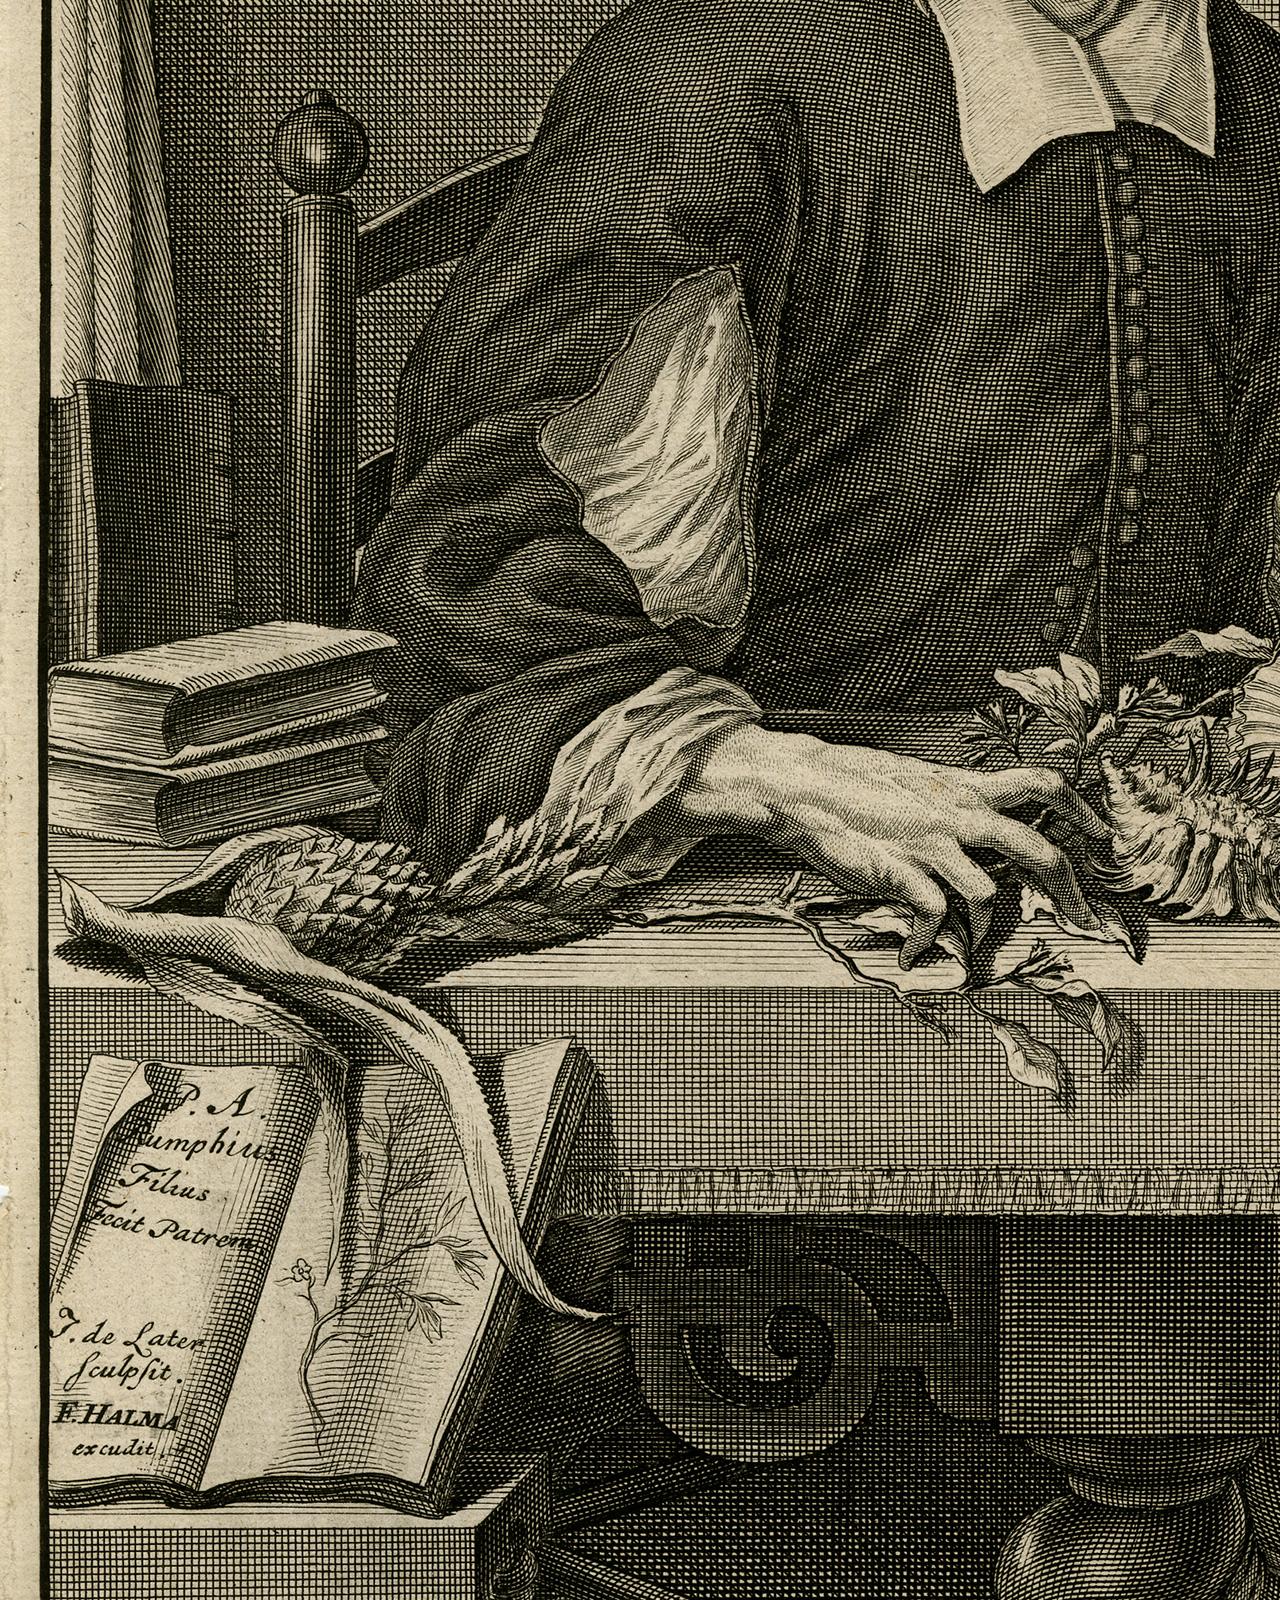 Portrait from Ambonian Cabinet of Curiosities by Rumphius - Engraving - 18th c. - Brown Portrait Print by Jorg Eberhardt Rumph